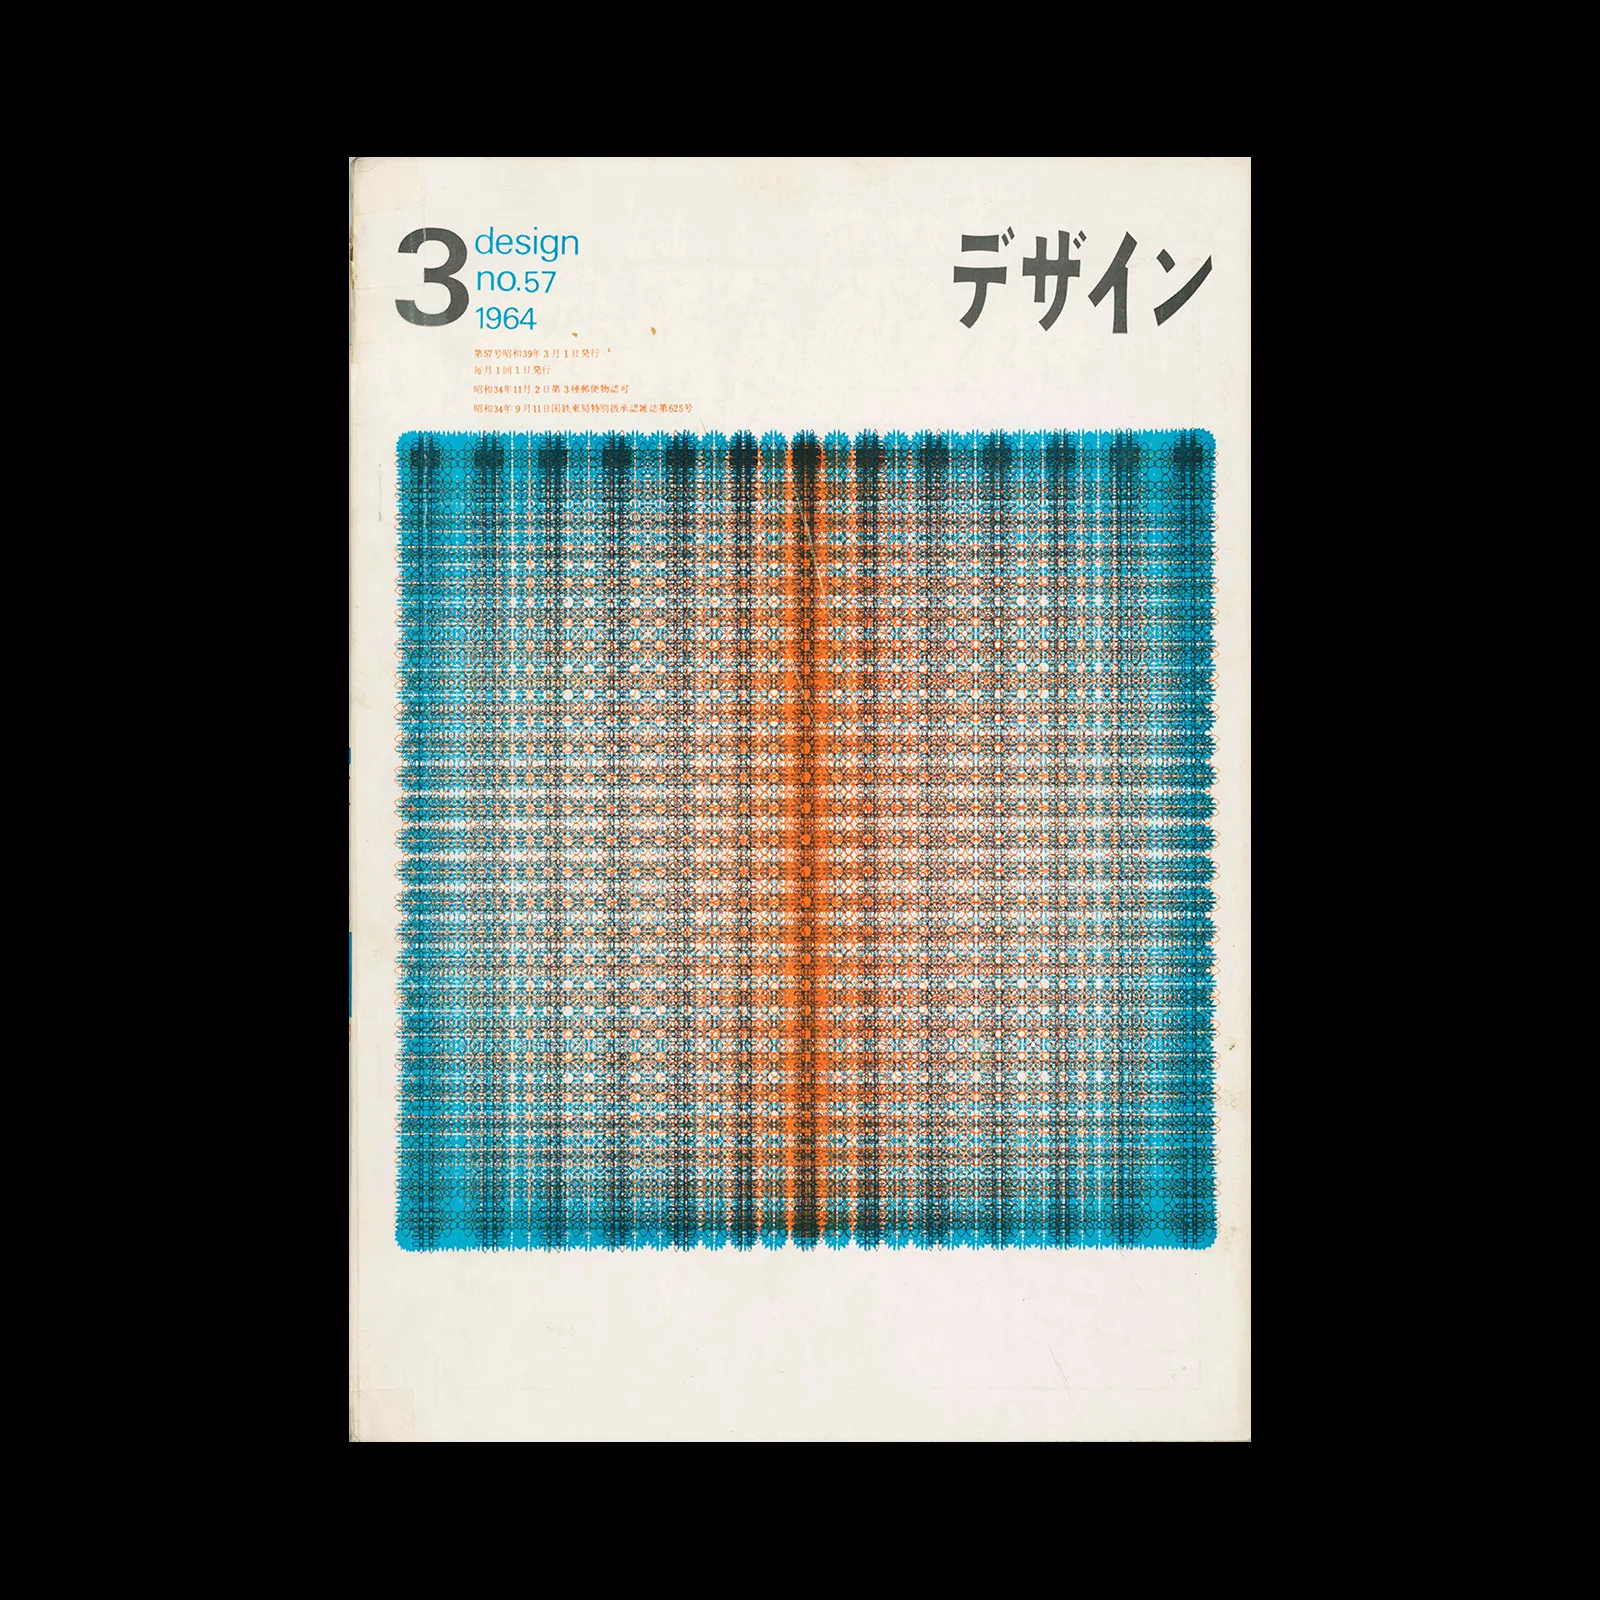 Design (Japan), 57, 1964. Cover design by Kohei Sugiura